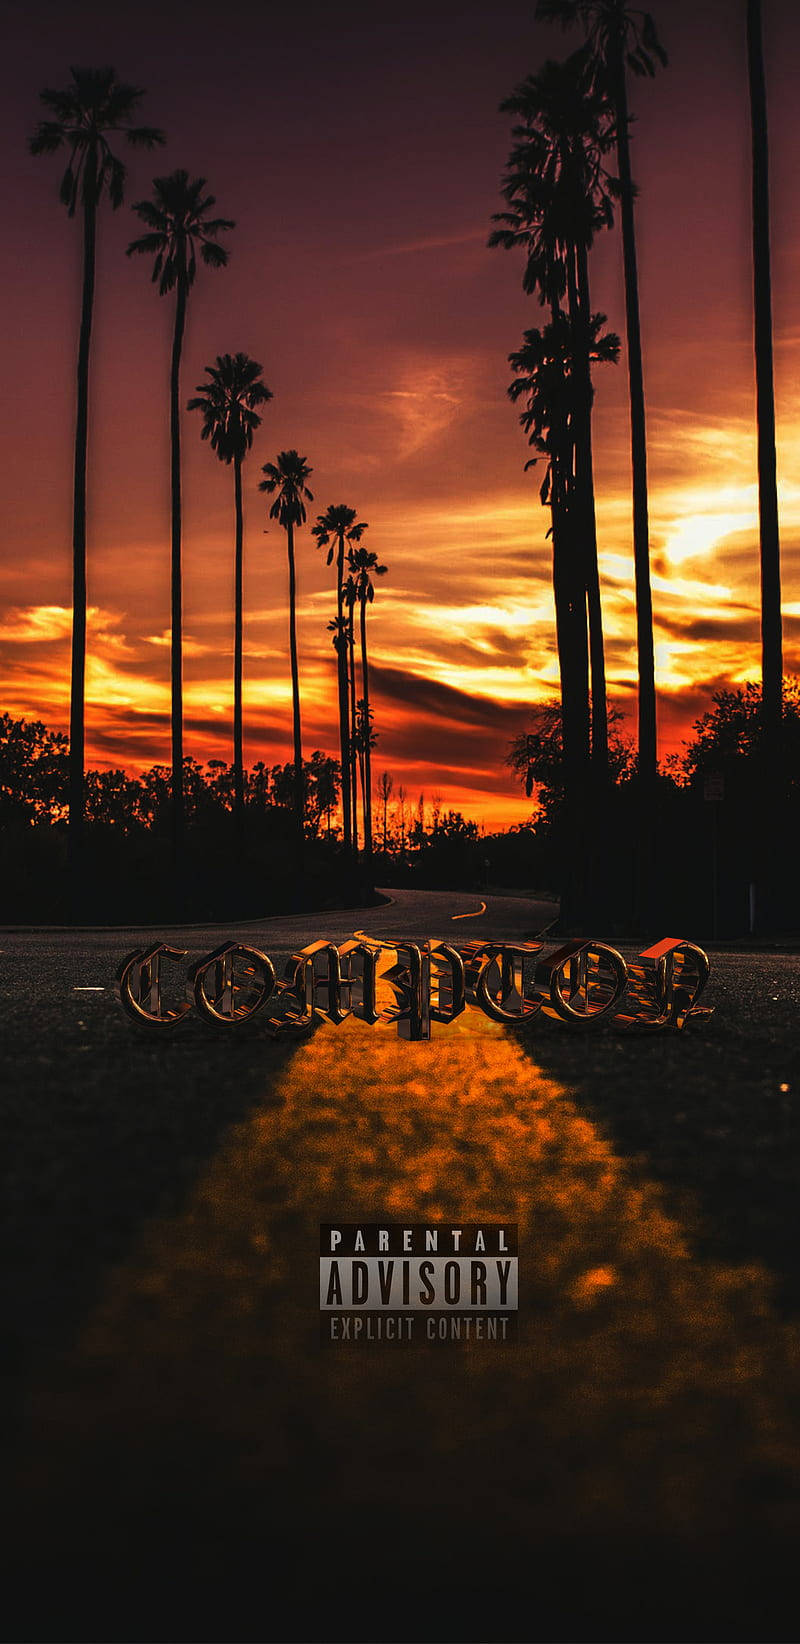 N.w.a. Compton California Sunset View Wallpaper